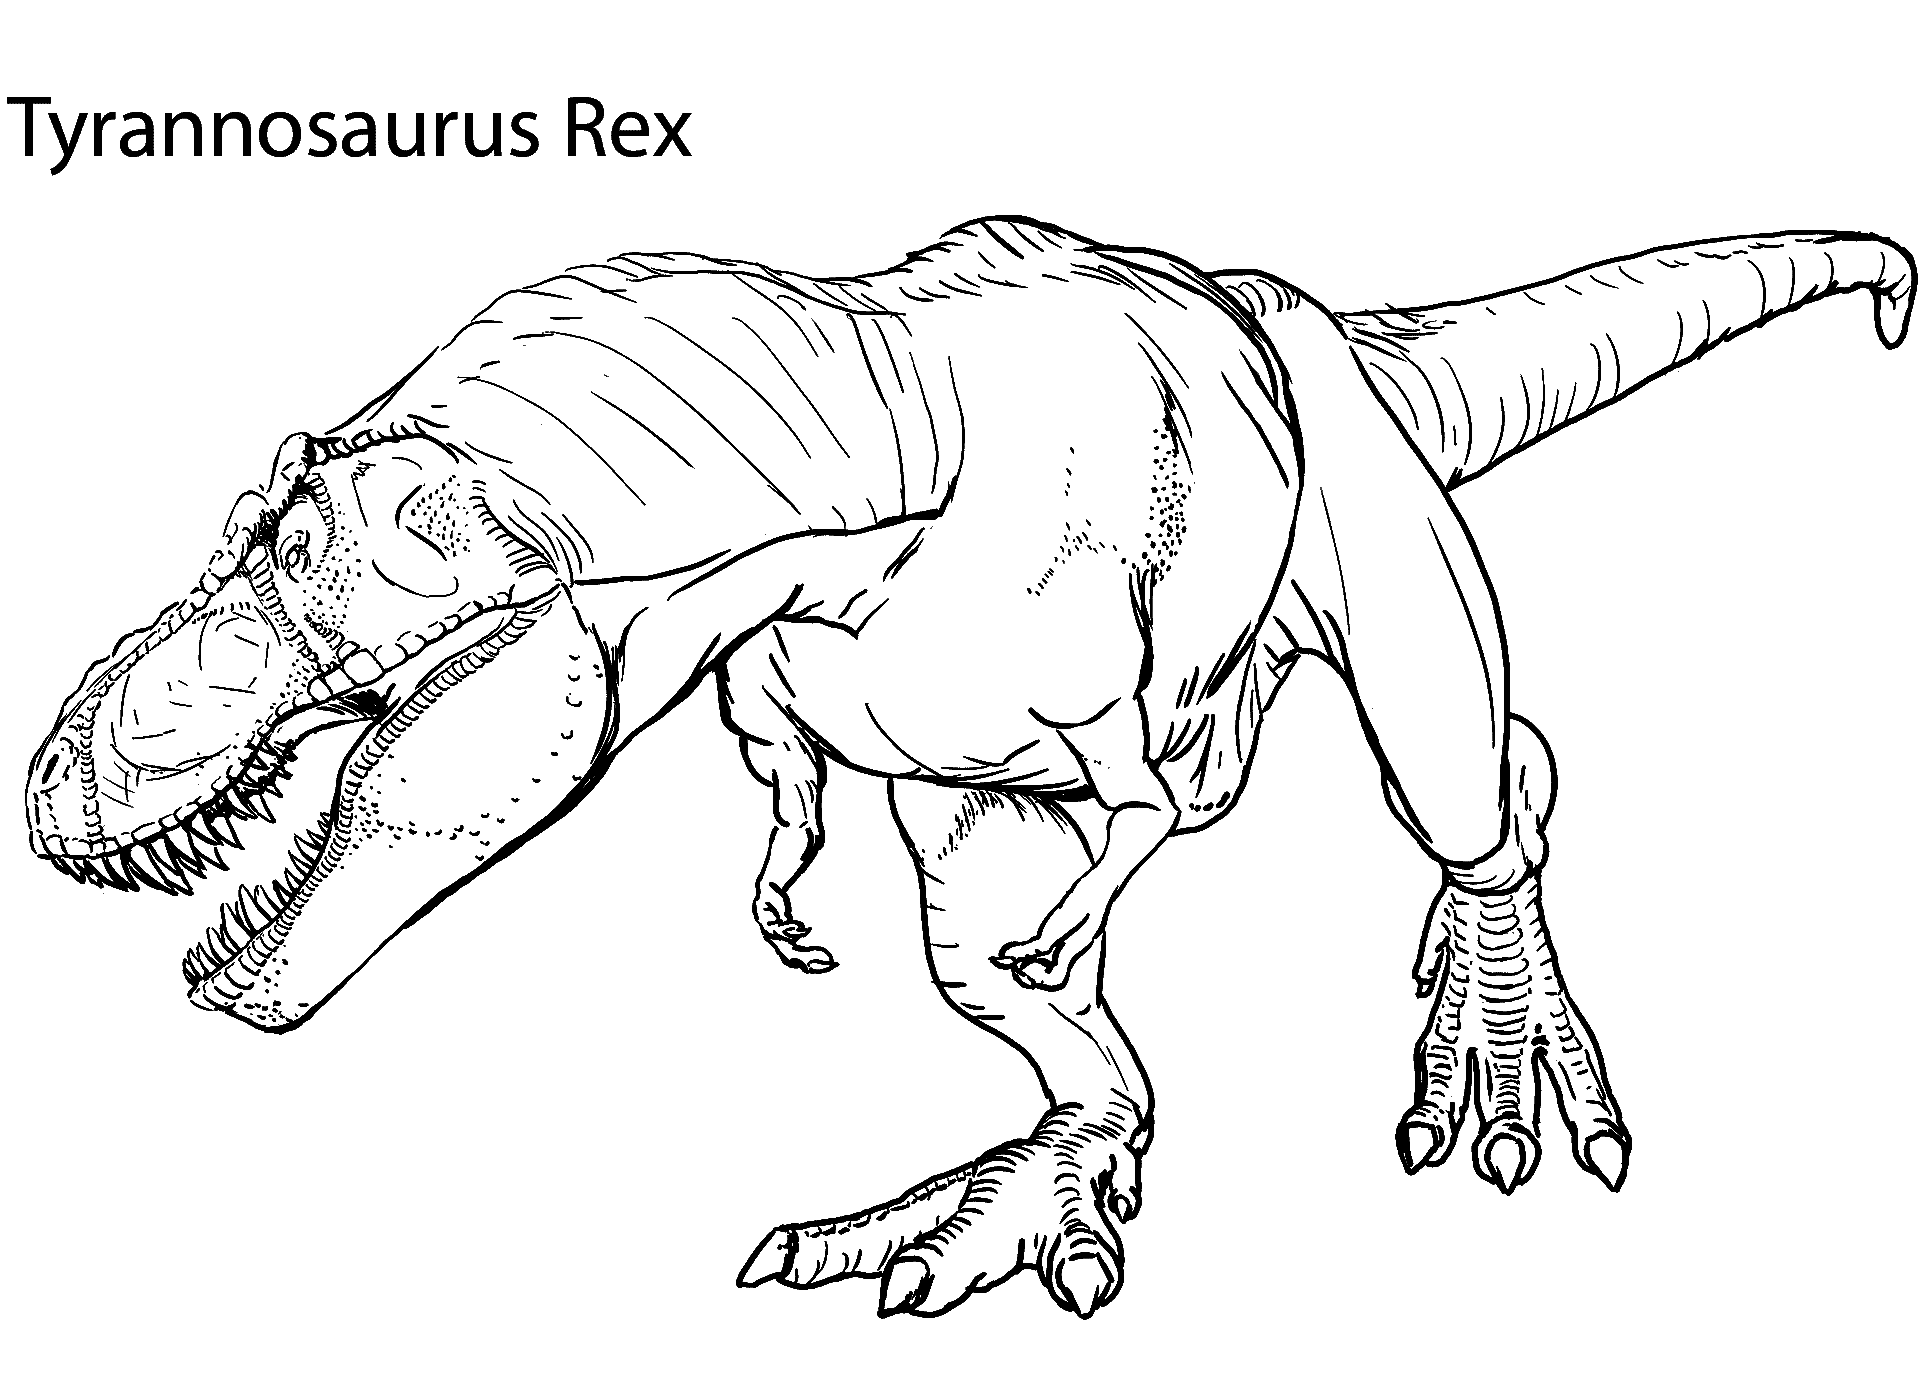 Tiranossauro Rex para colorir